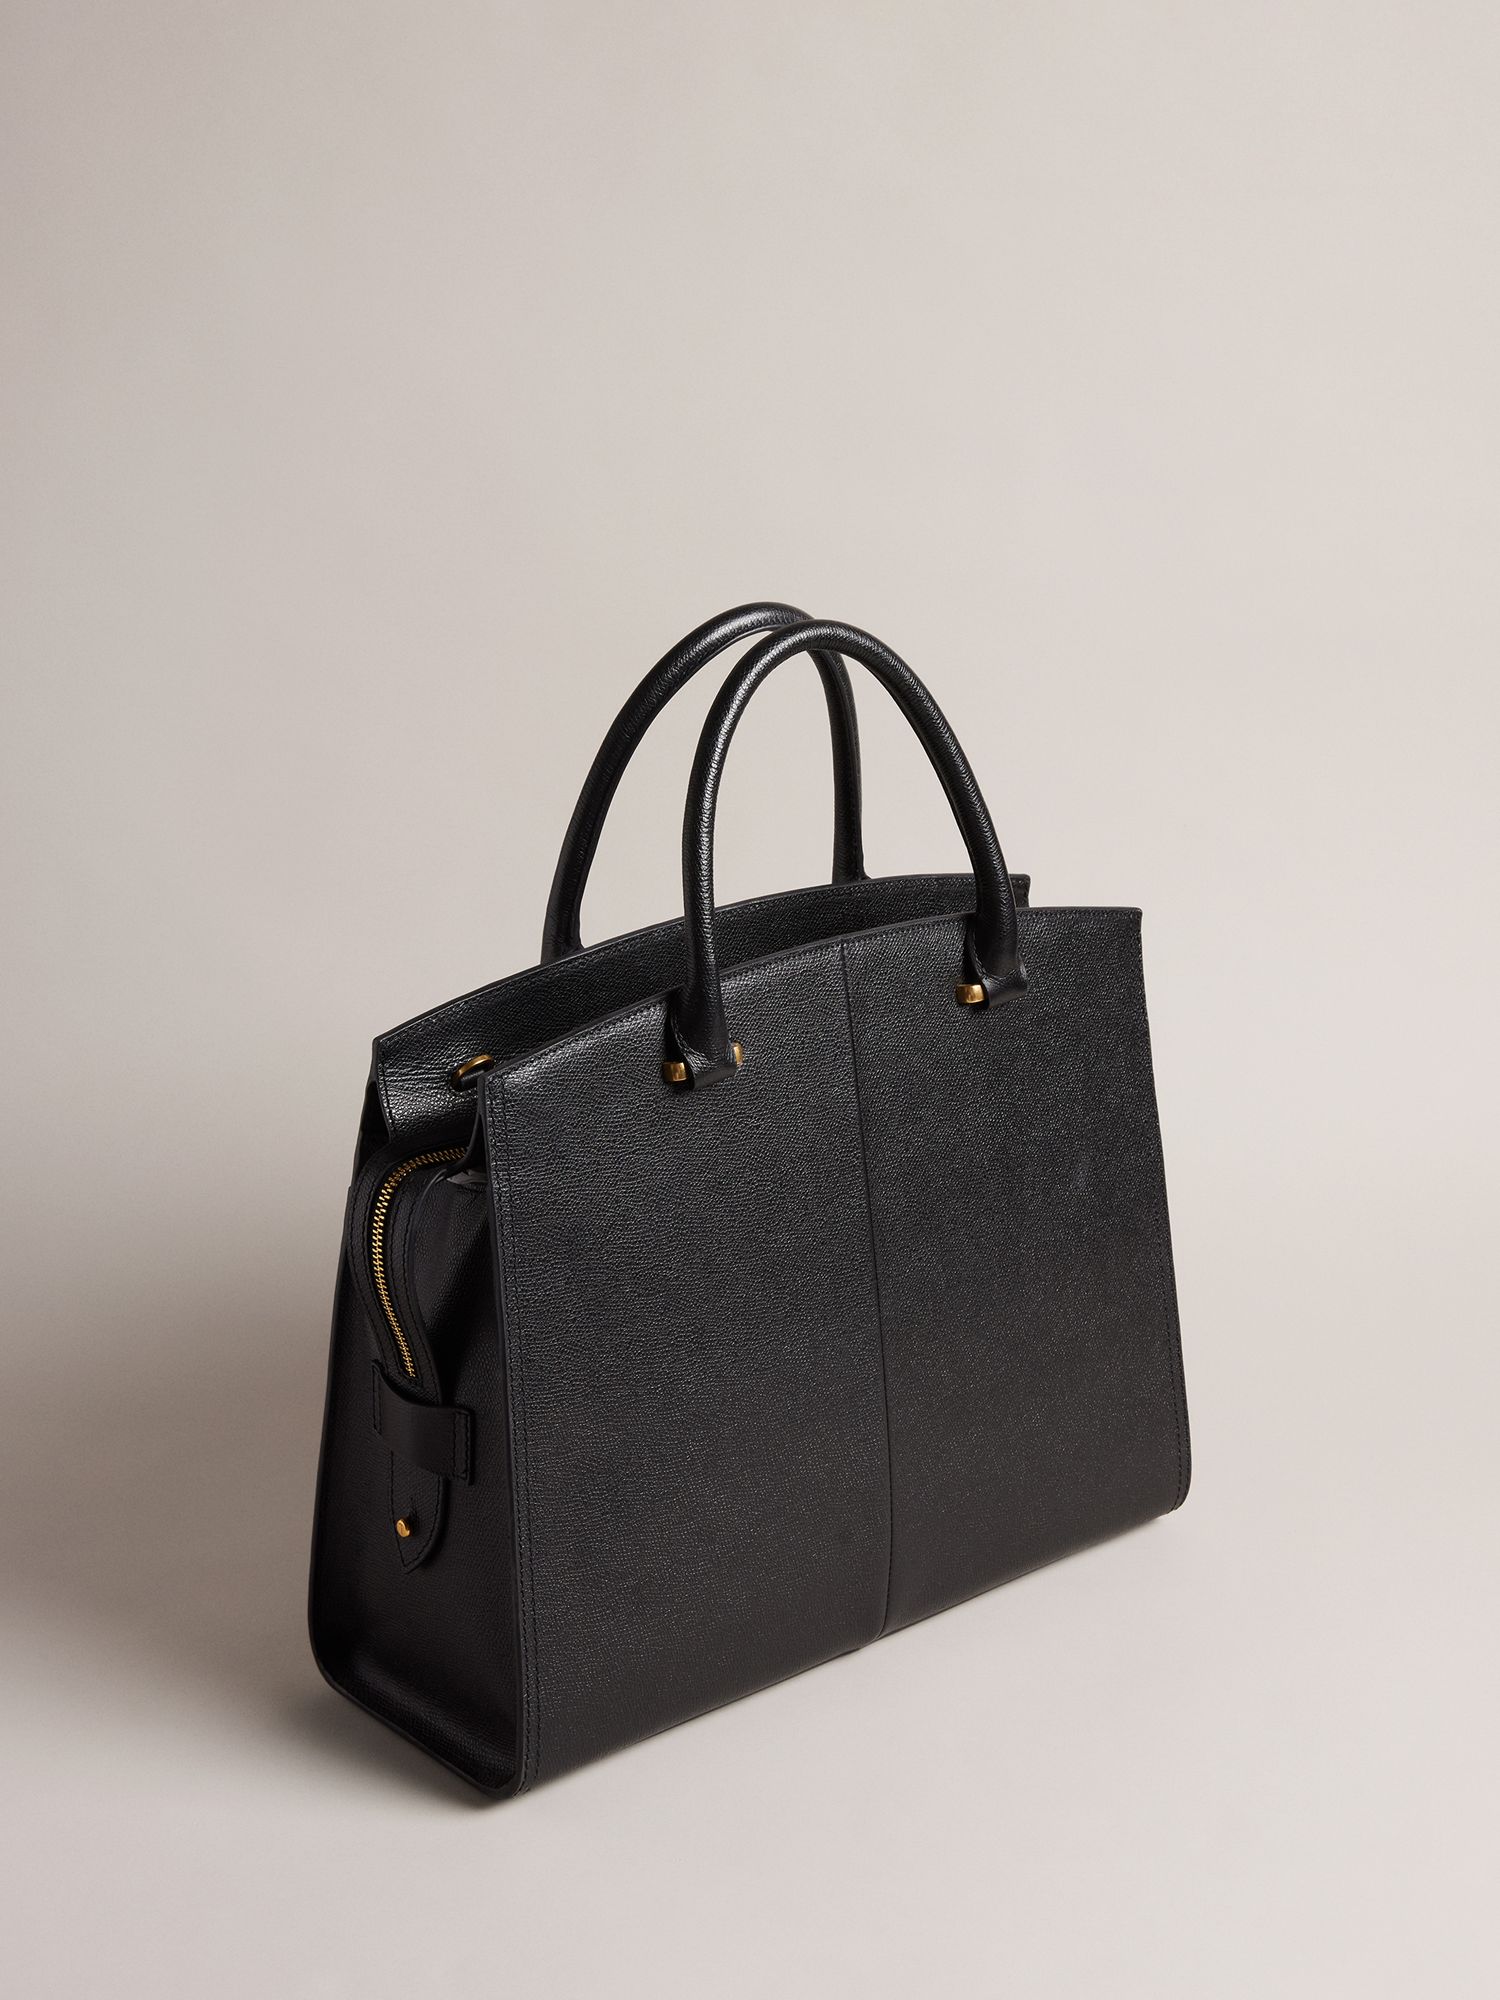 Ted Baker Richmon Large Leather Padlock Handbag, Black, One Size